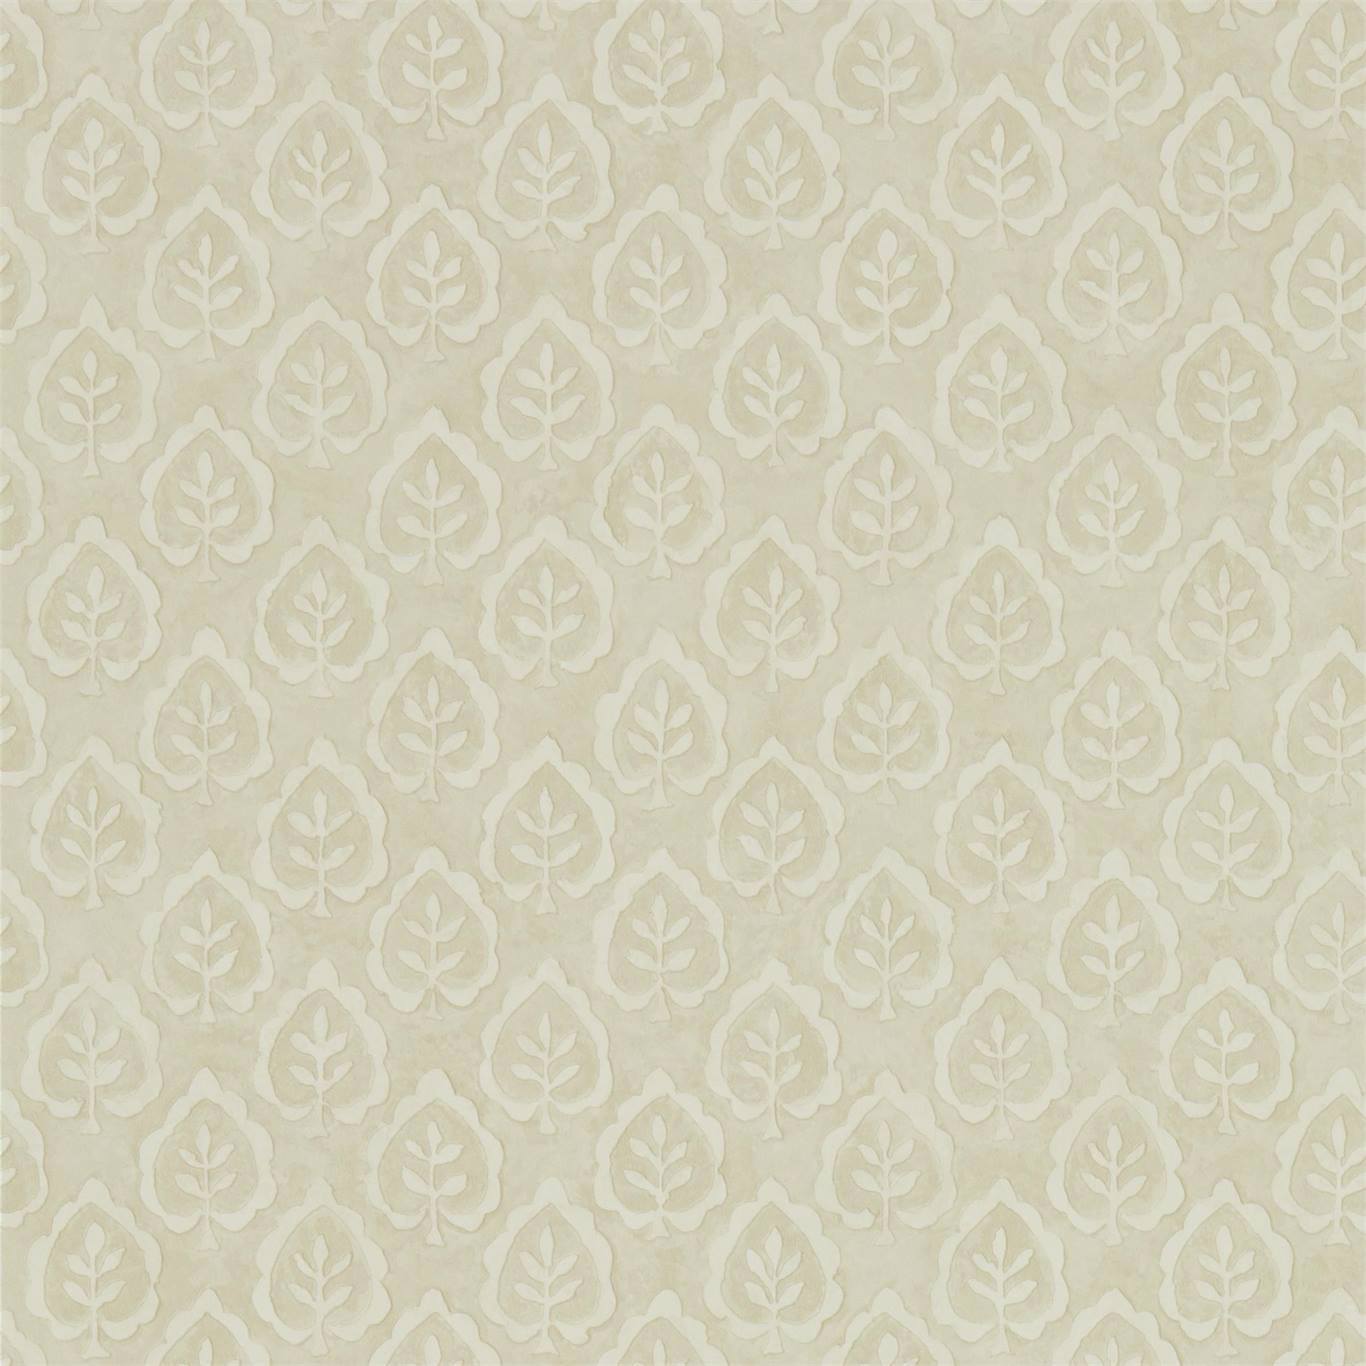 Fencott Cream Wallpaper DLMW216896 by Sanderson